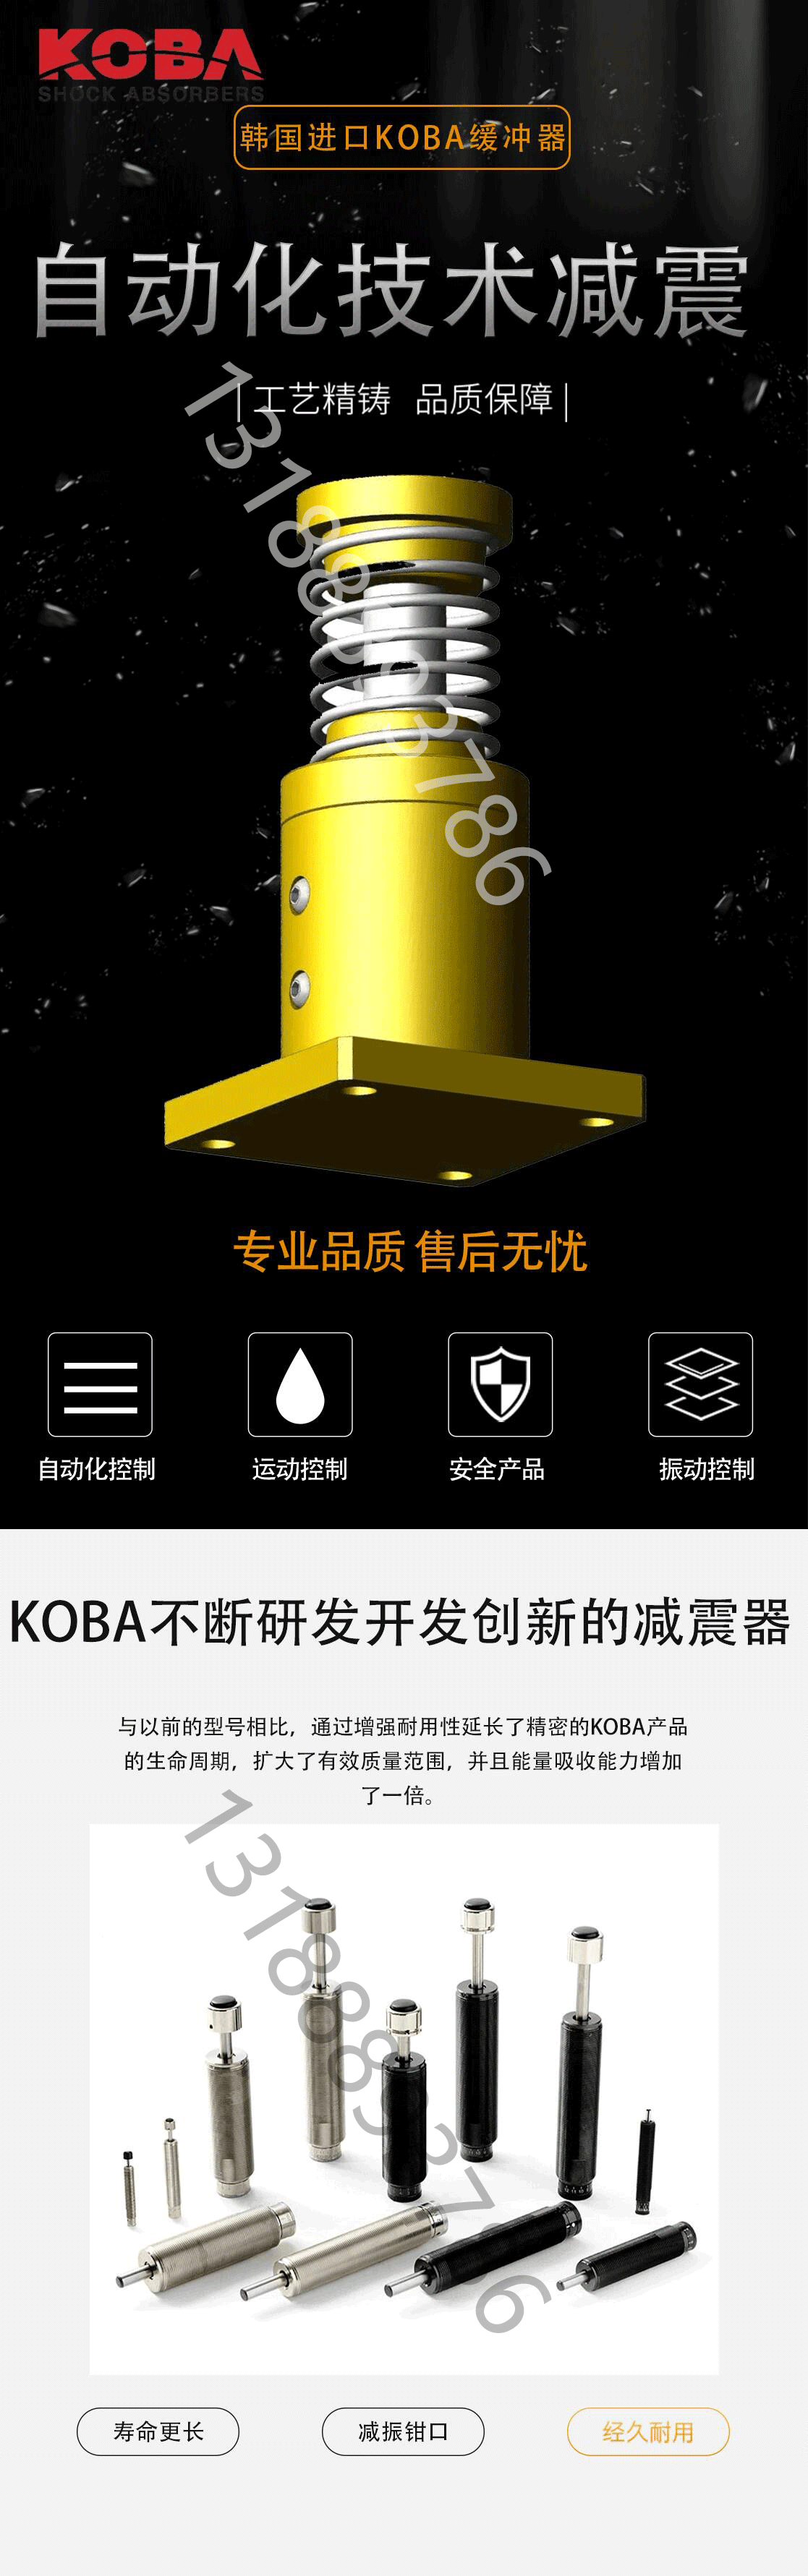 KOBA缓冲器与传统缓冲解决方案有何区别？